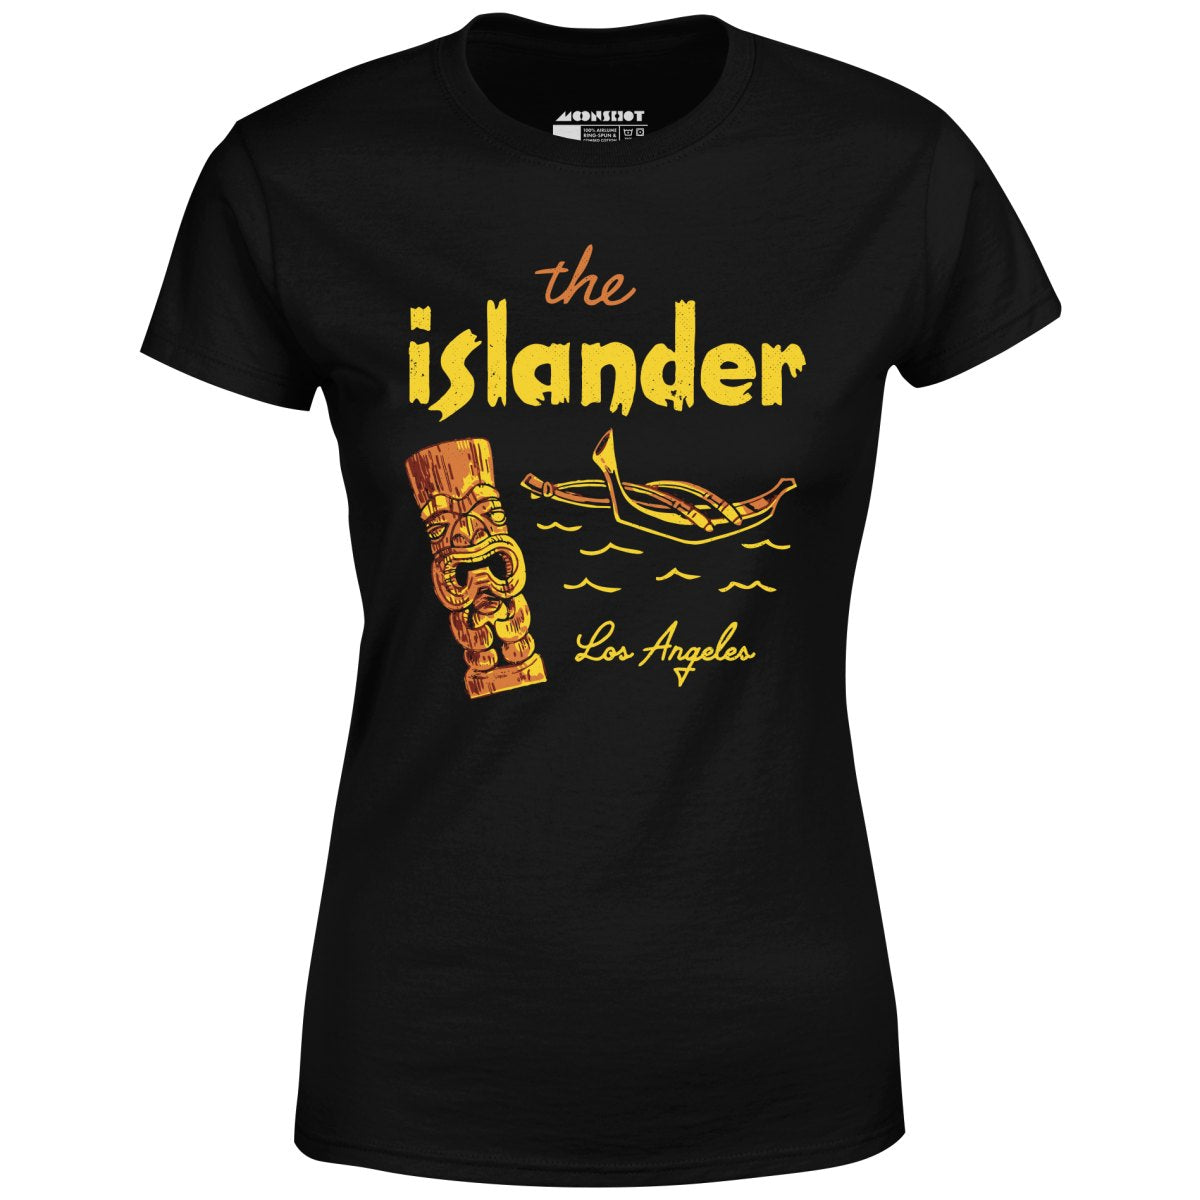 The Islander v2 - Los Angeles, CA - Vintage Tiki Bar - Women's T-Shirt